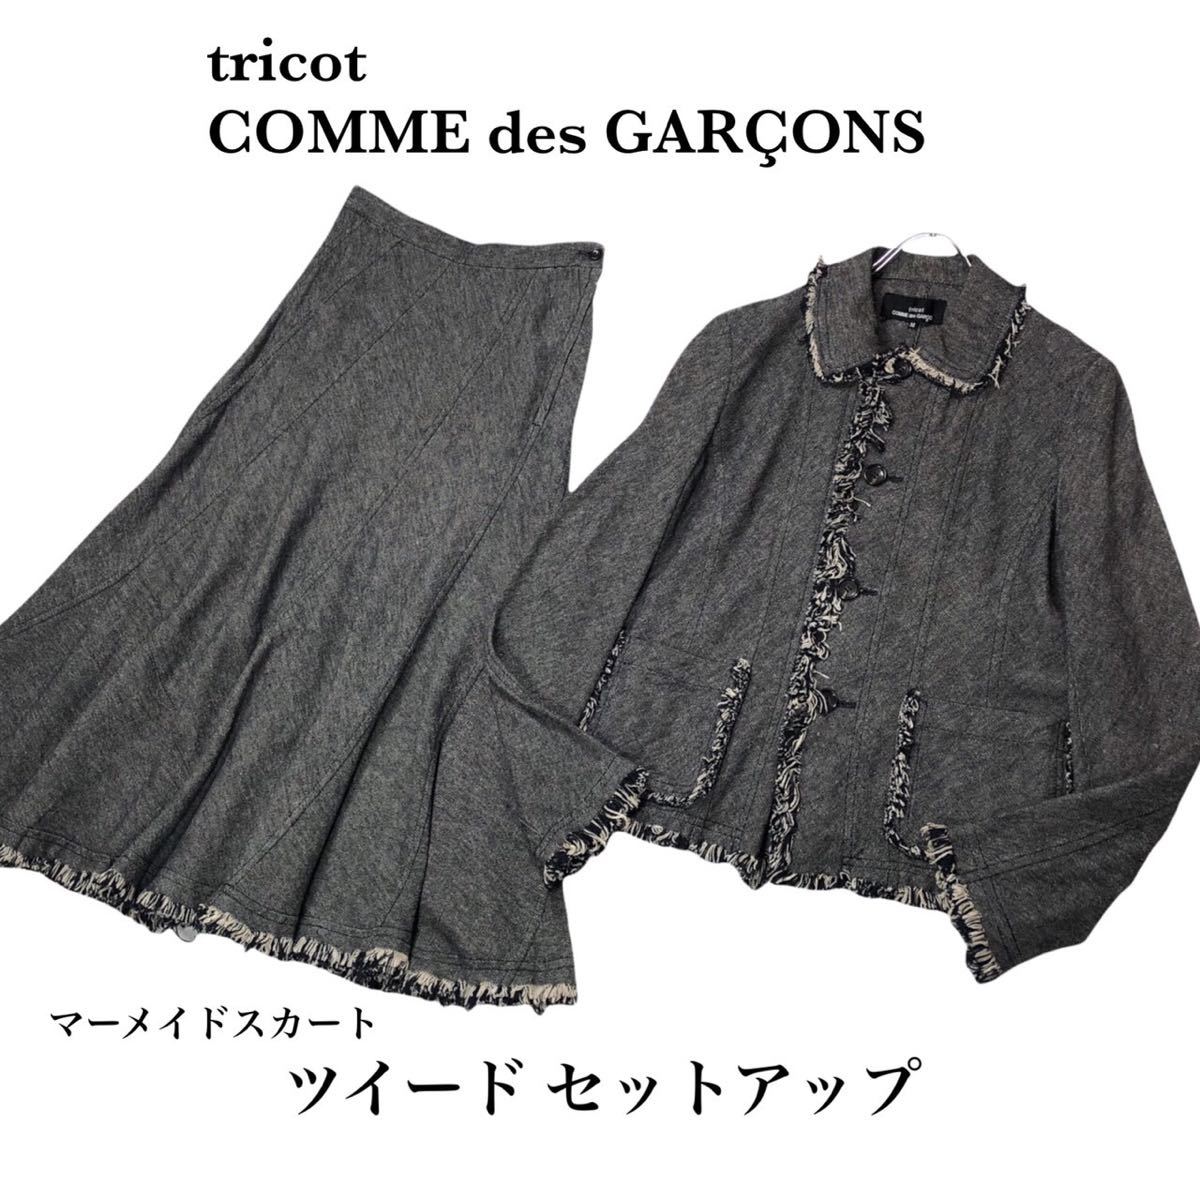 tricot COMME des GARCONS ジャケット セットアップ レディース